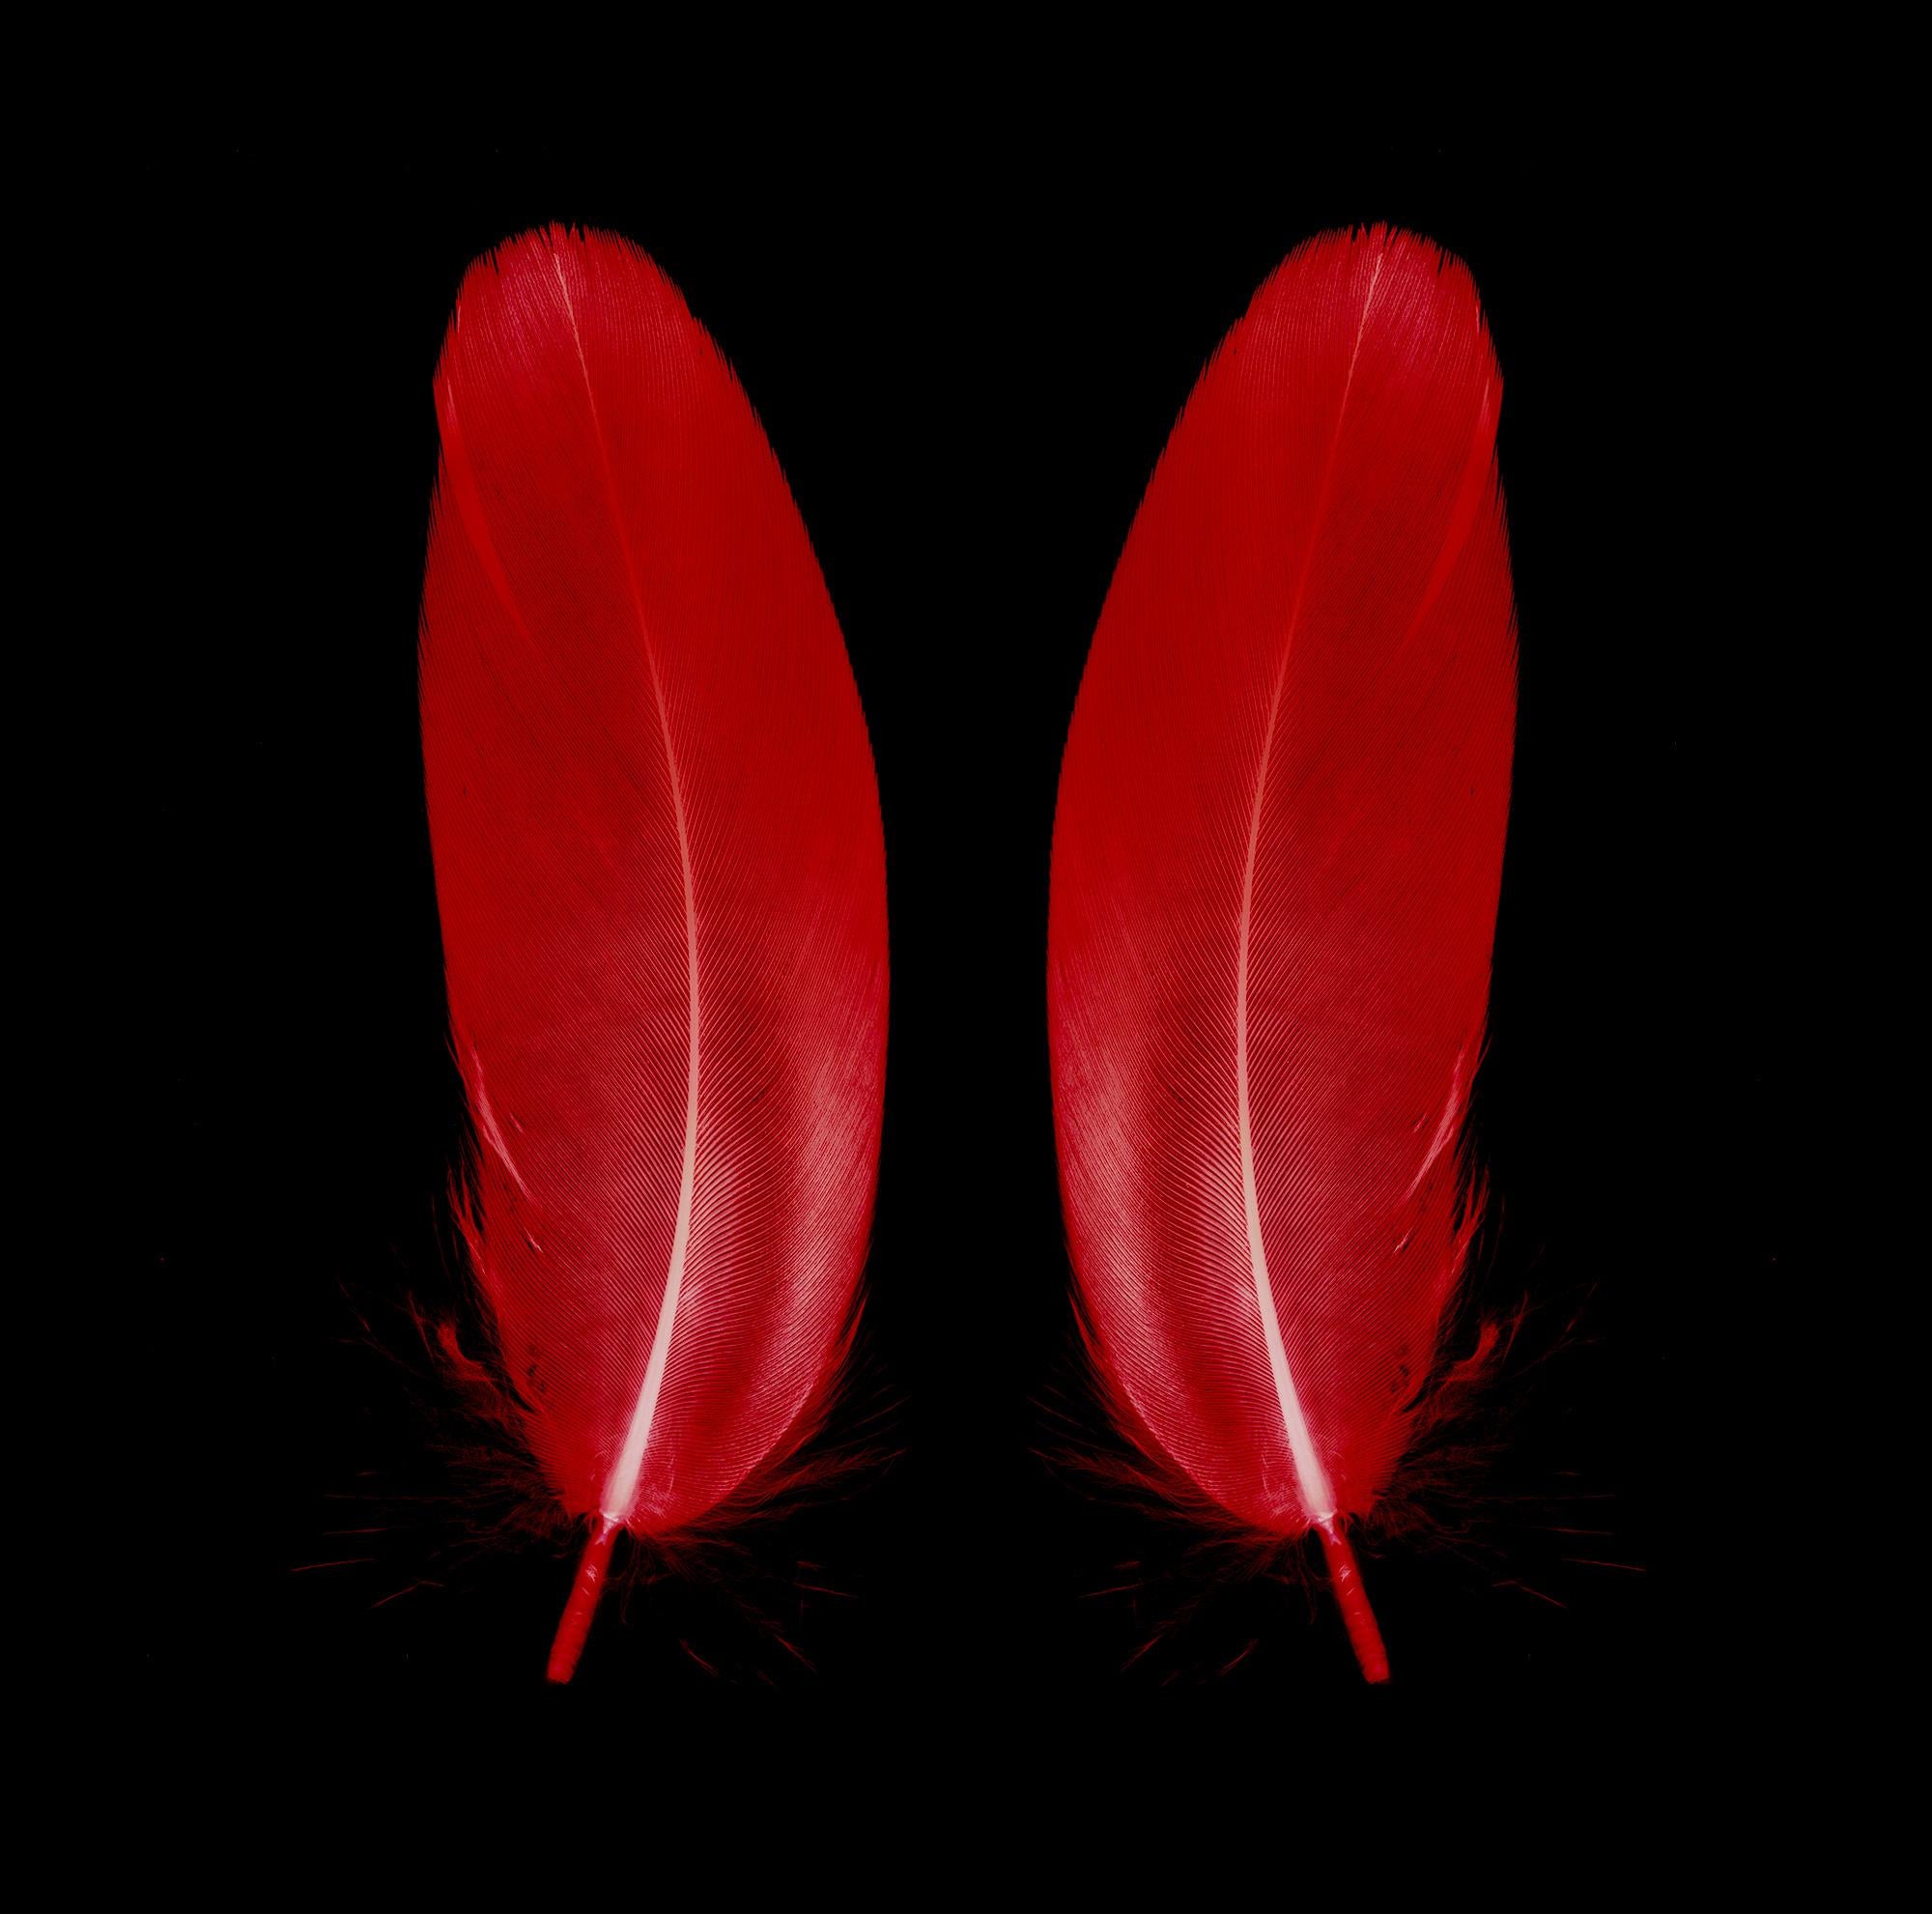 Scarlet Butterfly - Red Feathers - Konzeptuelle, Farbfotografie